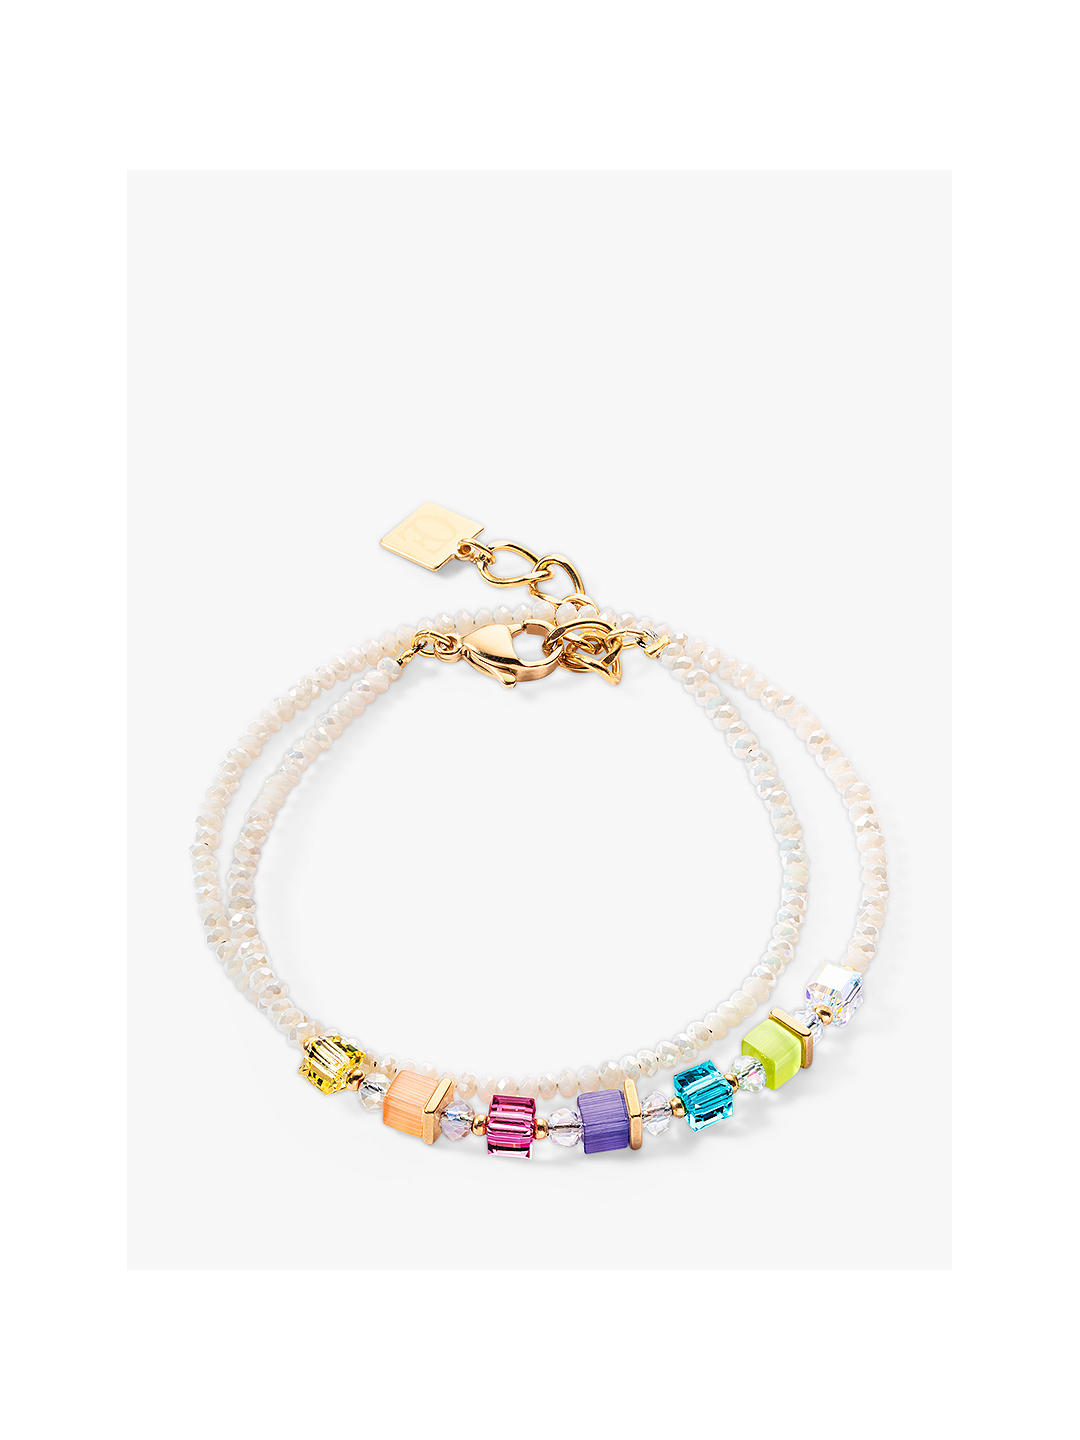 COEUR DE LION Swarovski Crystal Bead Bracelet, Gold/Multi